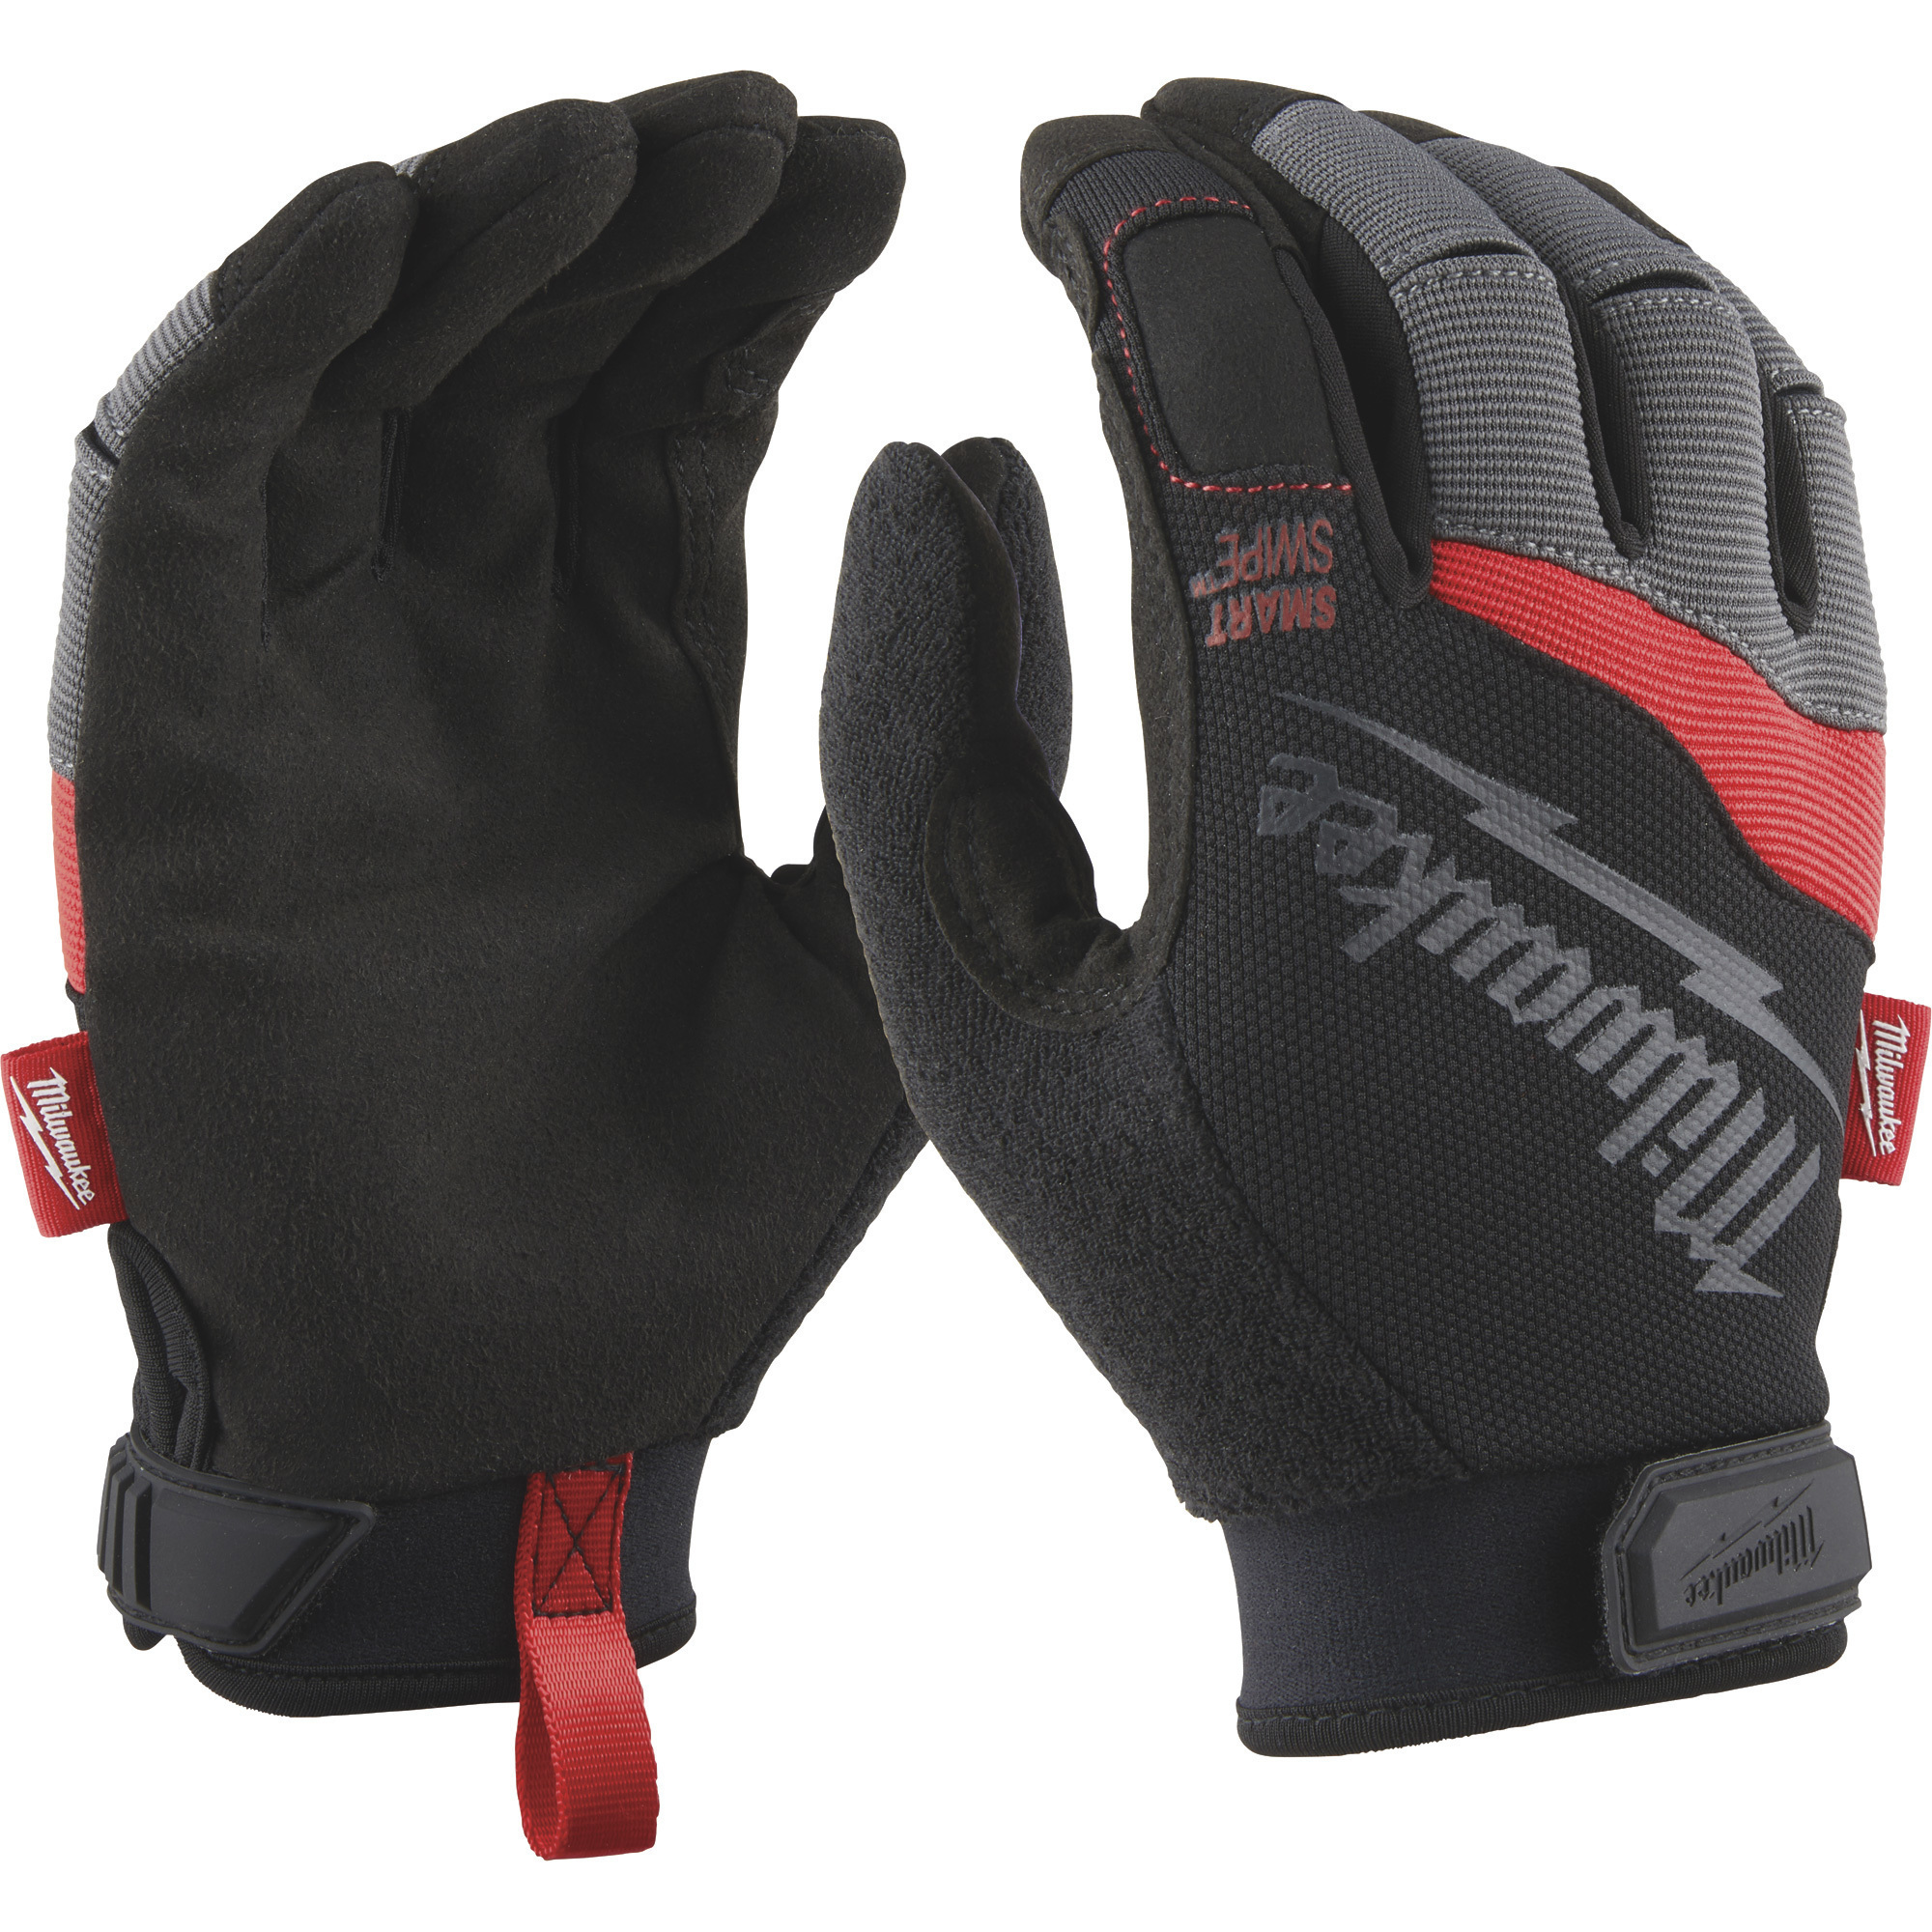 Milwaukee Men's Performance Work Gloves, Black/Gray/Red, 2XL, Model 48-22-8724